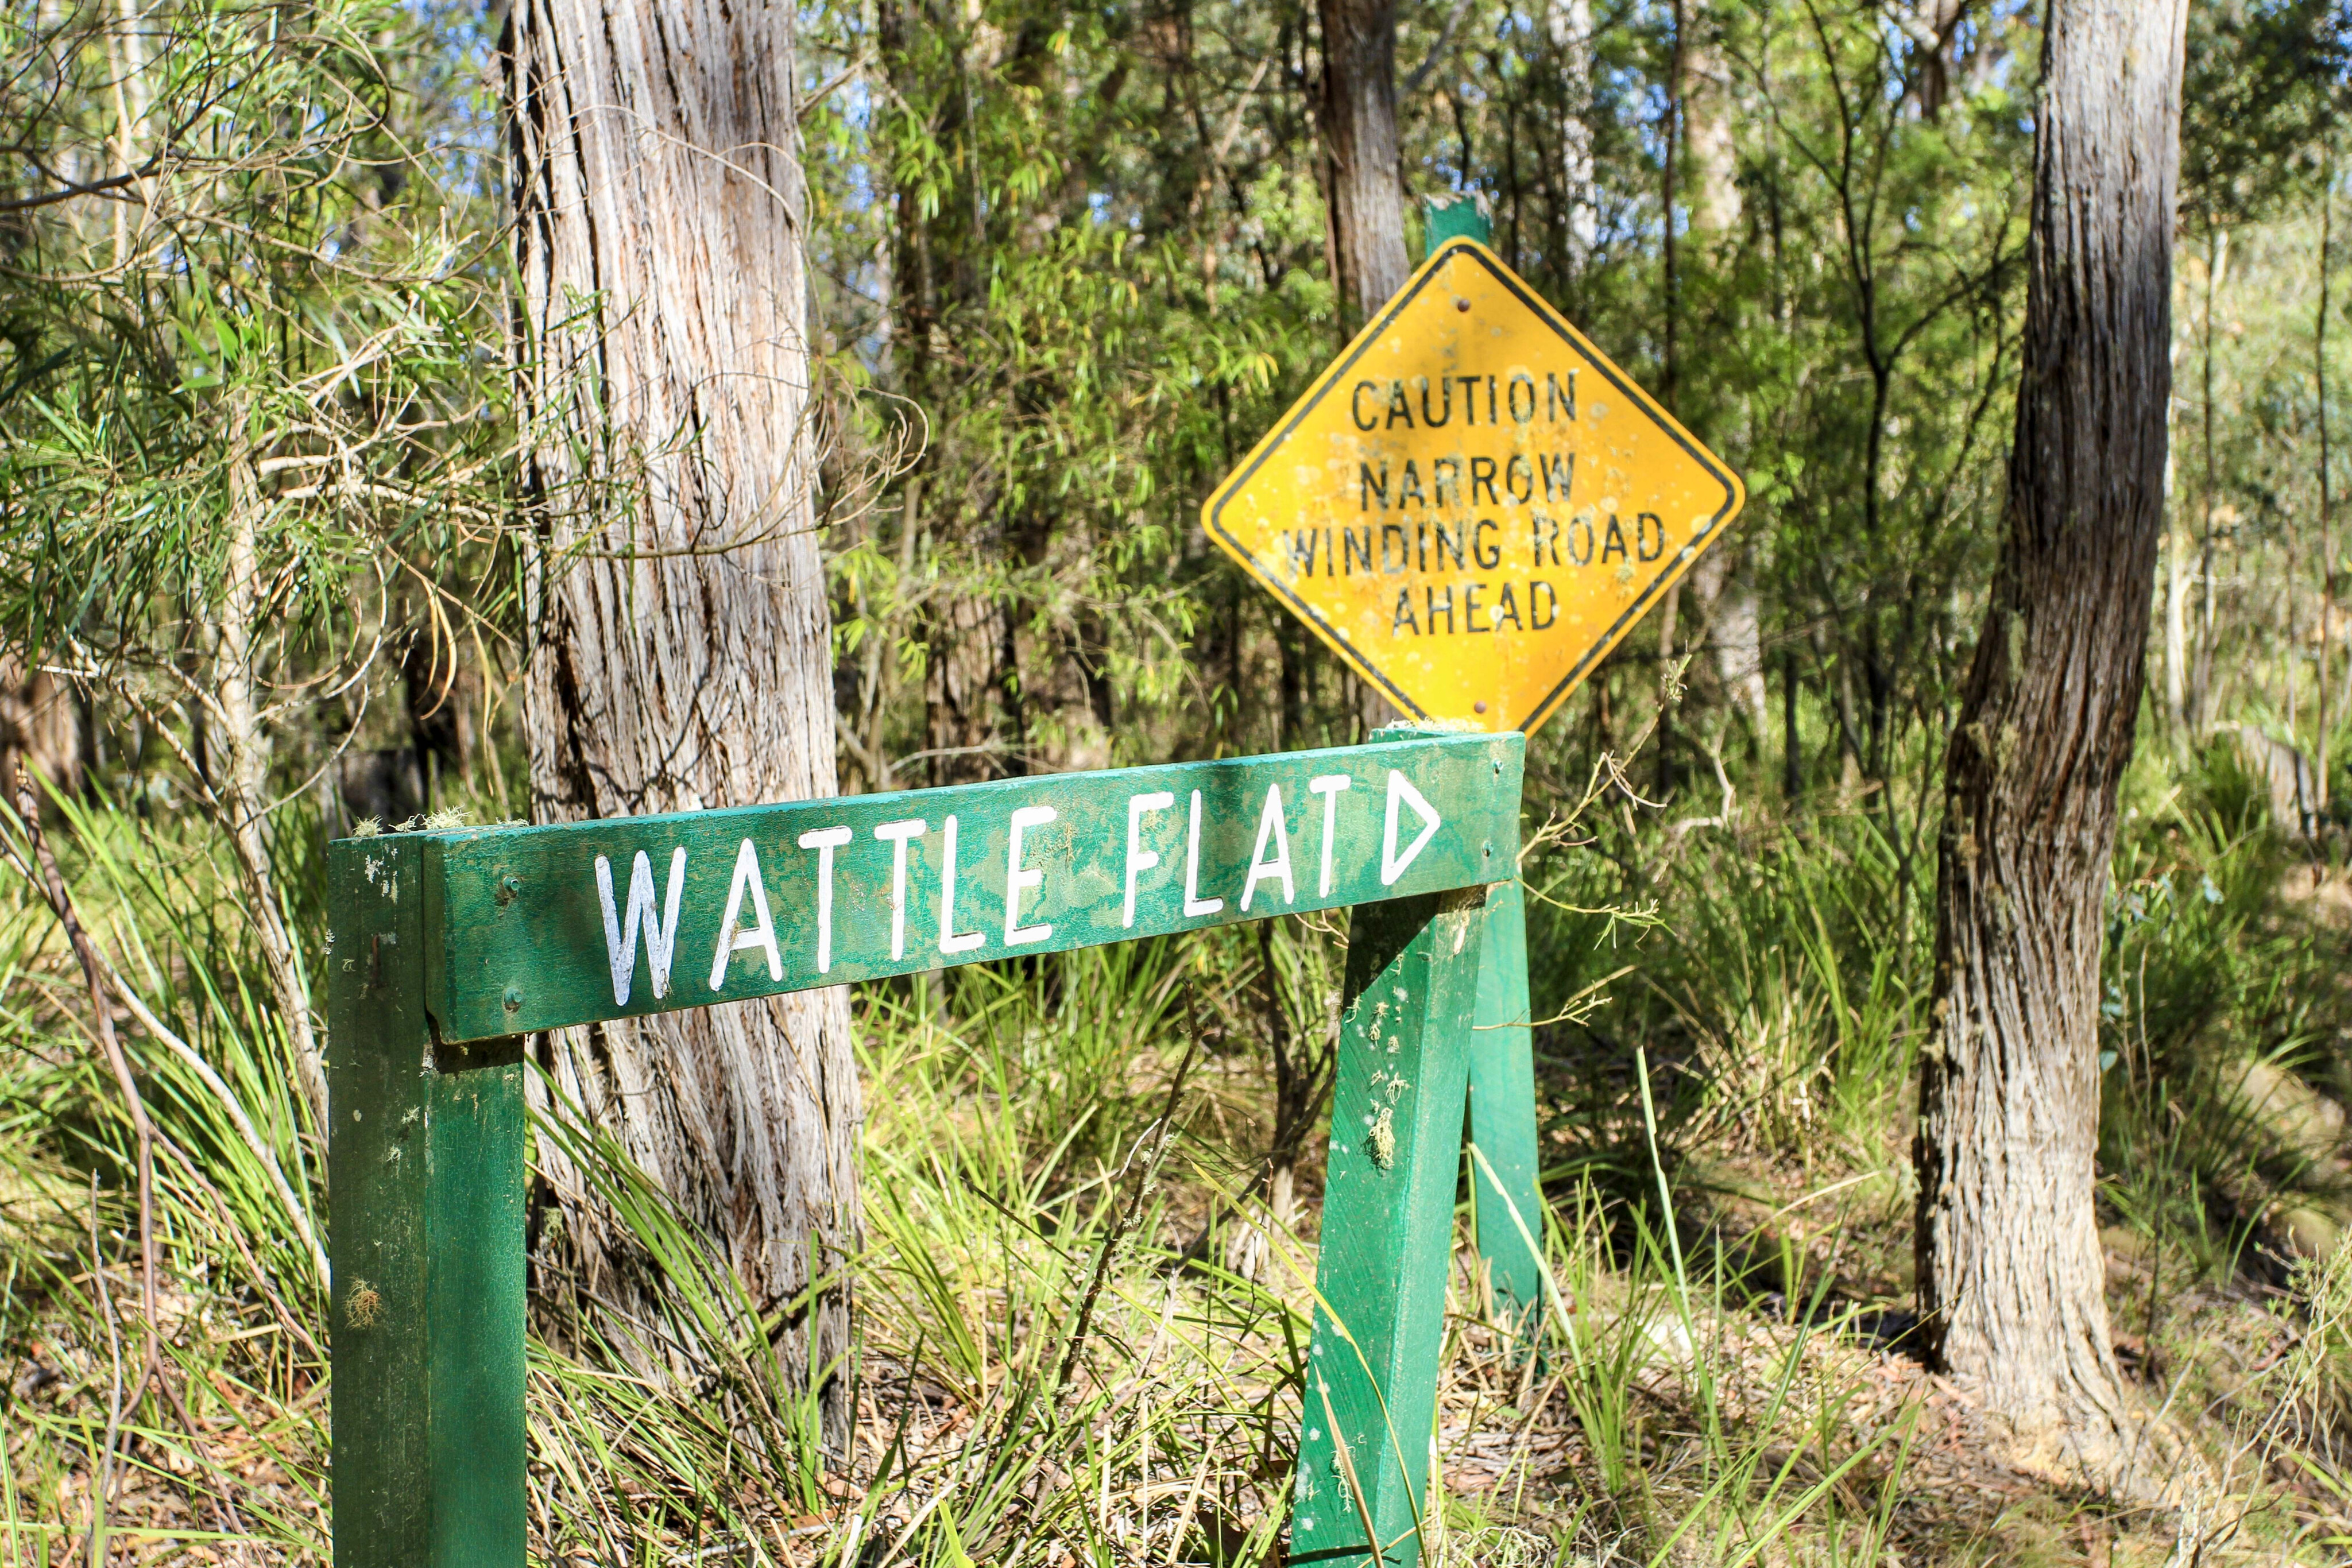 127e20c1/4x4 australia explore oxley wild national park signs everywhere jpg